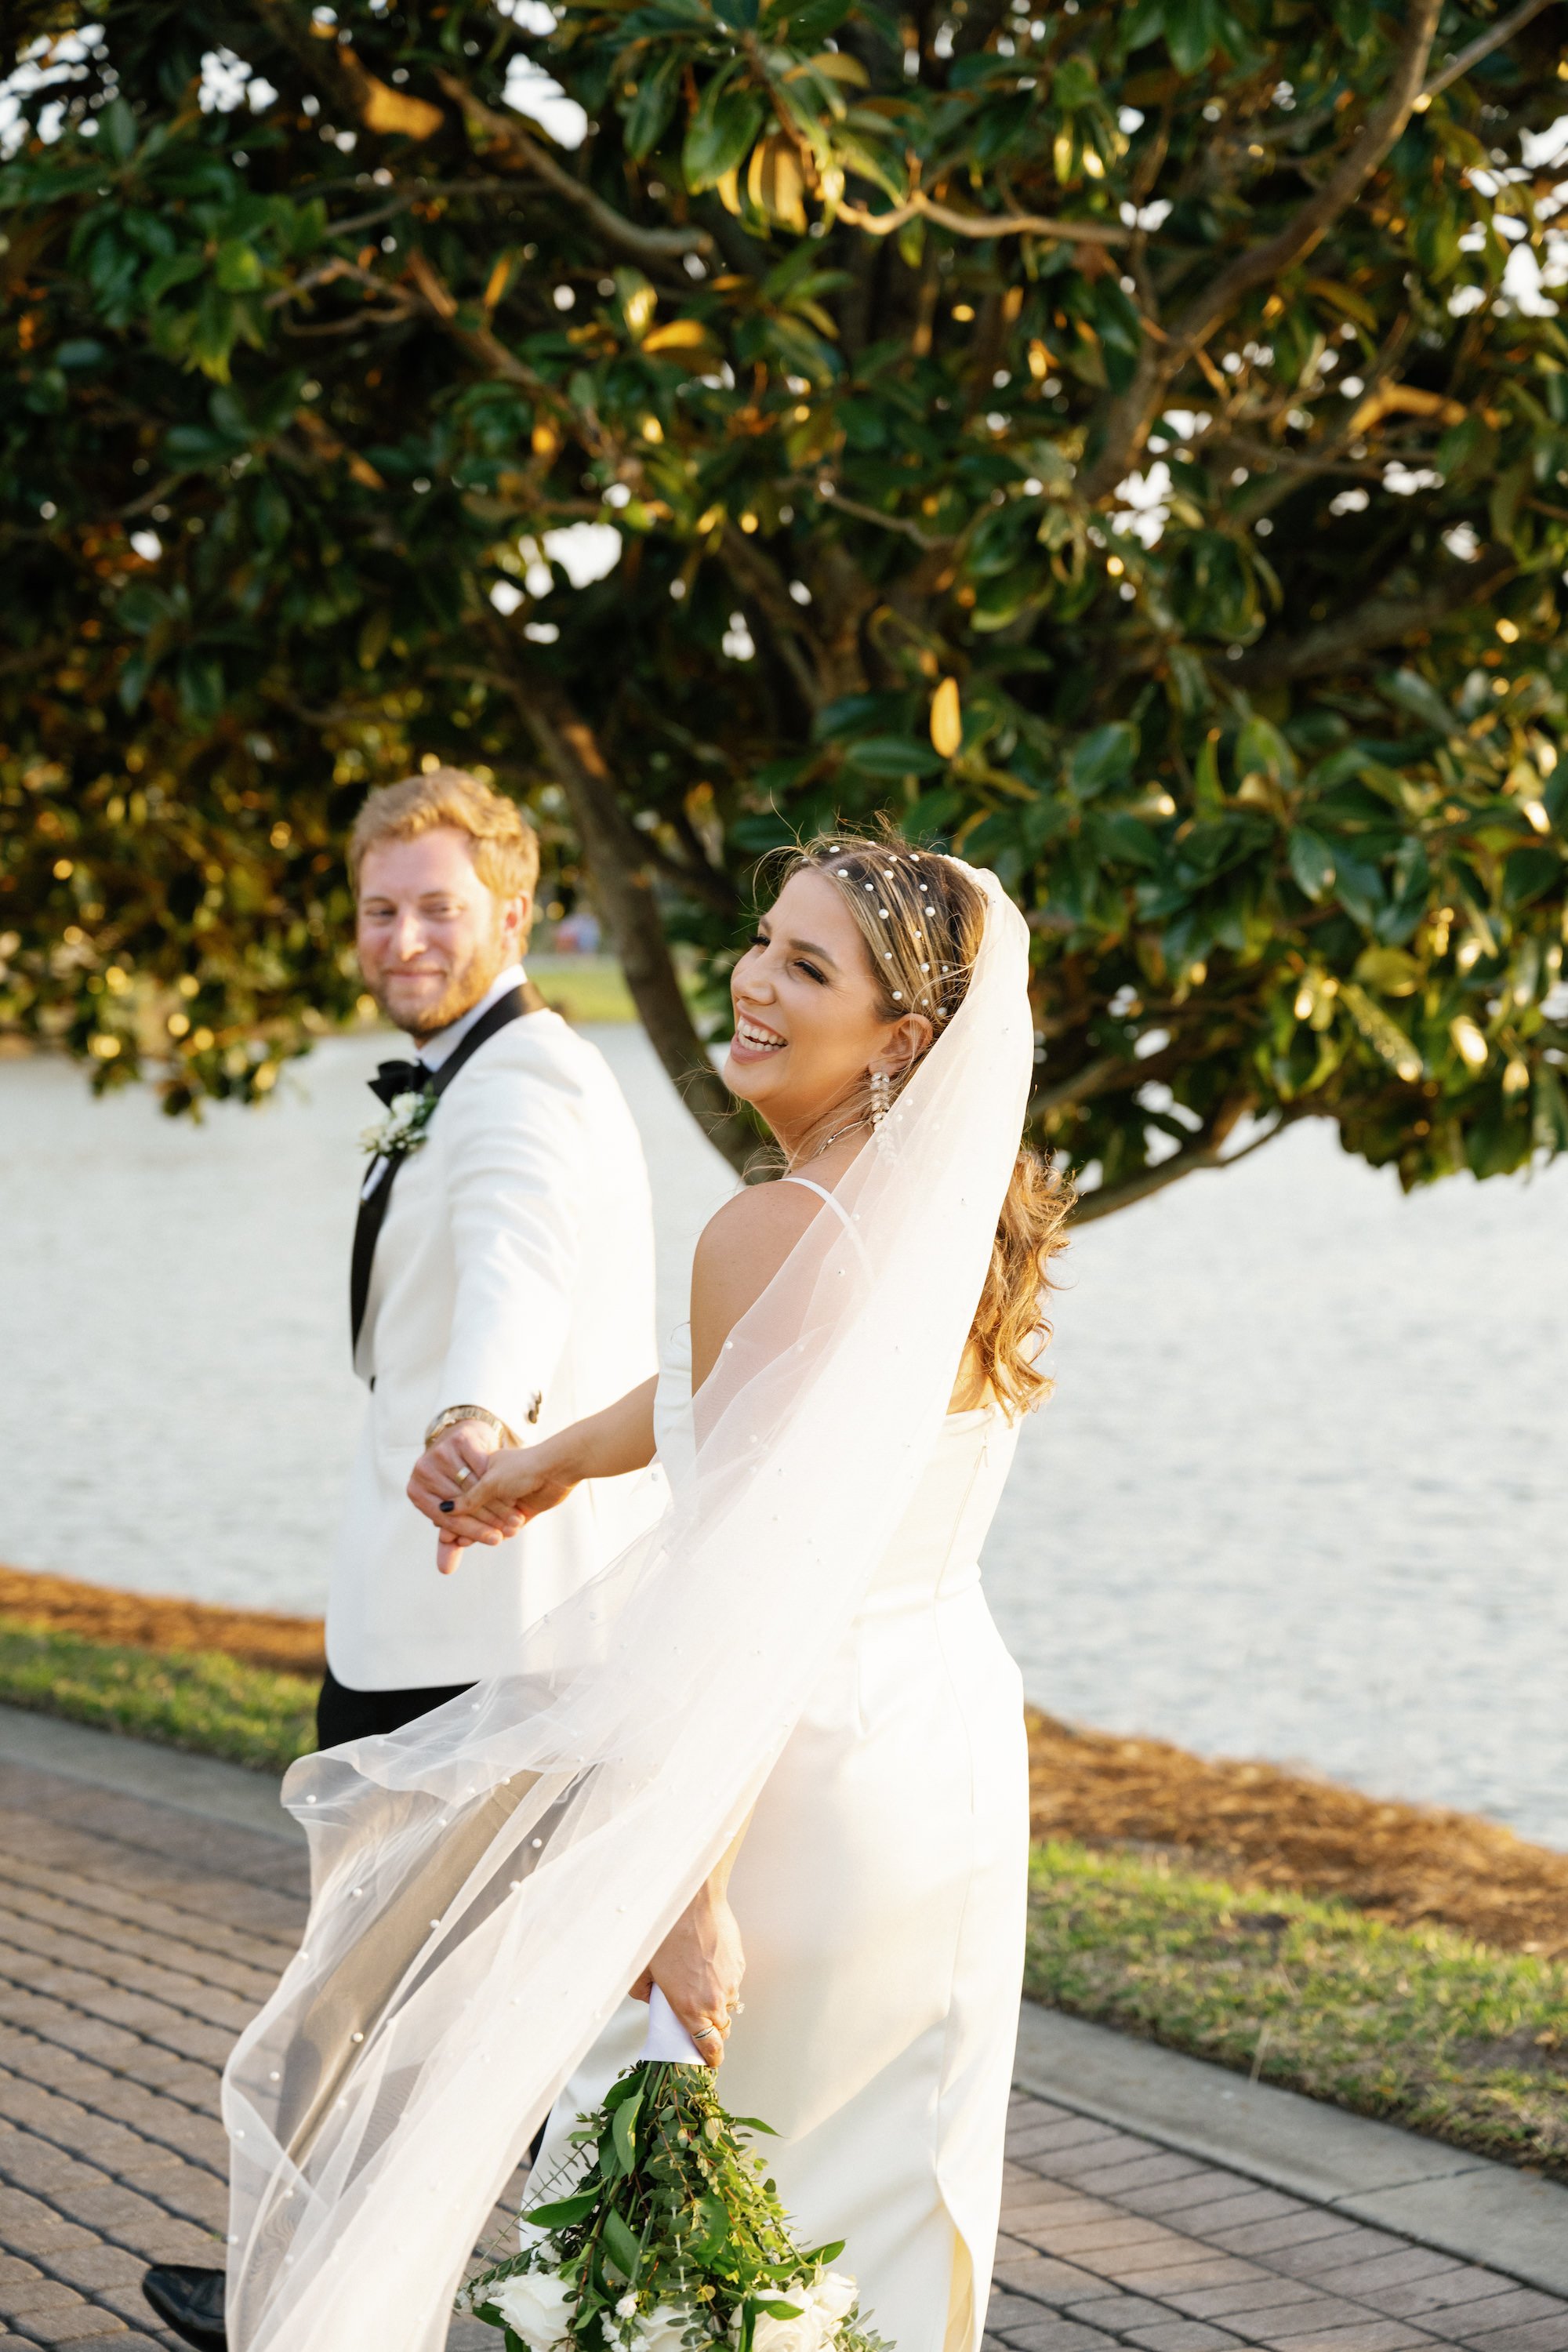 28Timeless White Courtyard Wedding | Ritz Carlton Orlando | Photographers Dewitt for Love Photography.jpg